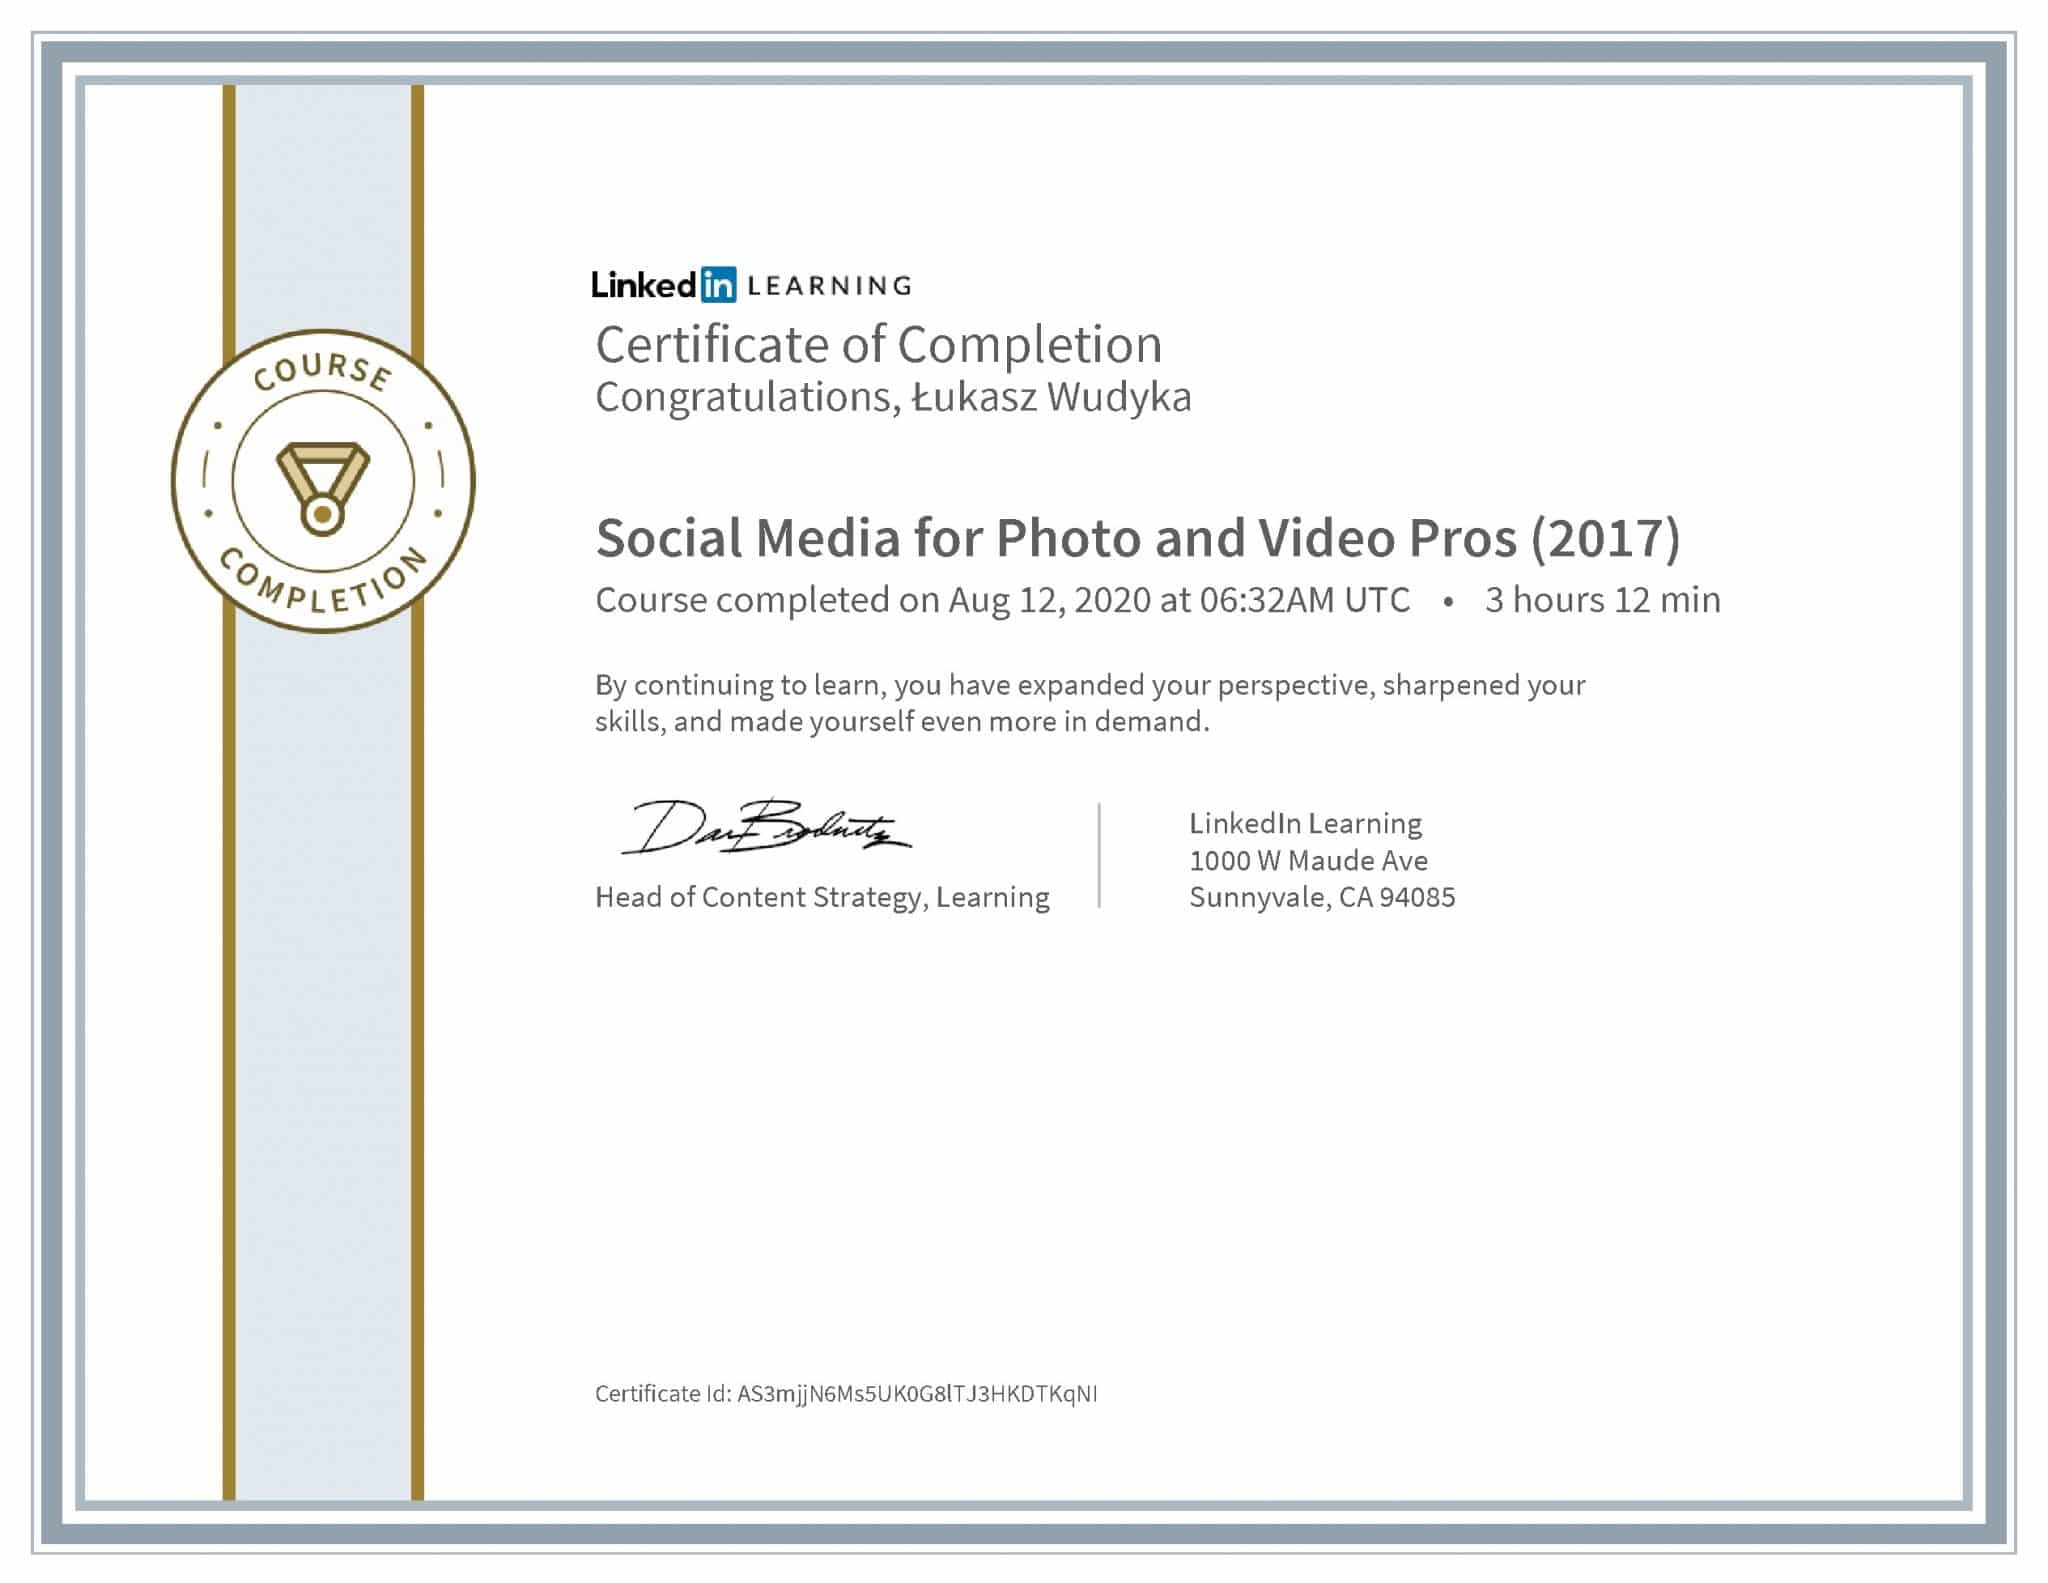 Łukasz Wudyka certyfikat LinkedIn Social Media for Photo and Video Pros (2017)